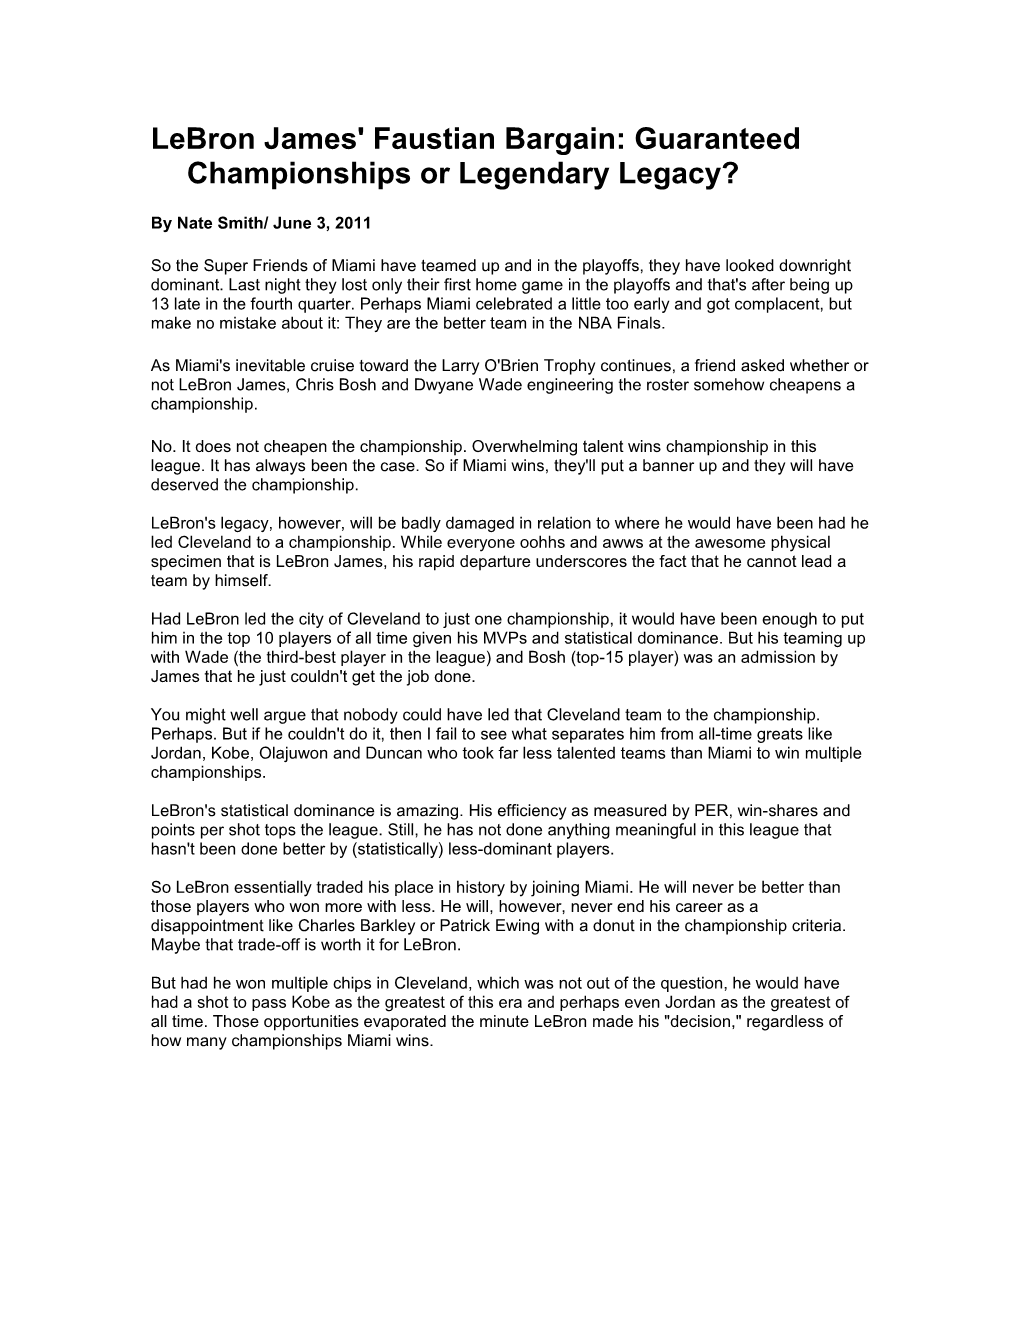 Lebron James' Faustian Bargain: Guranteed Championships Or Legendary Legacy